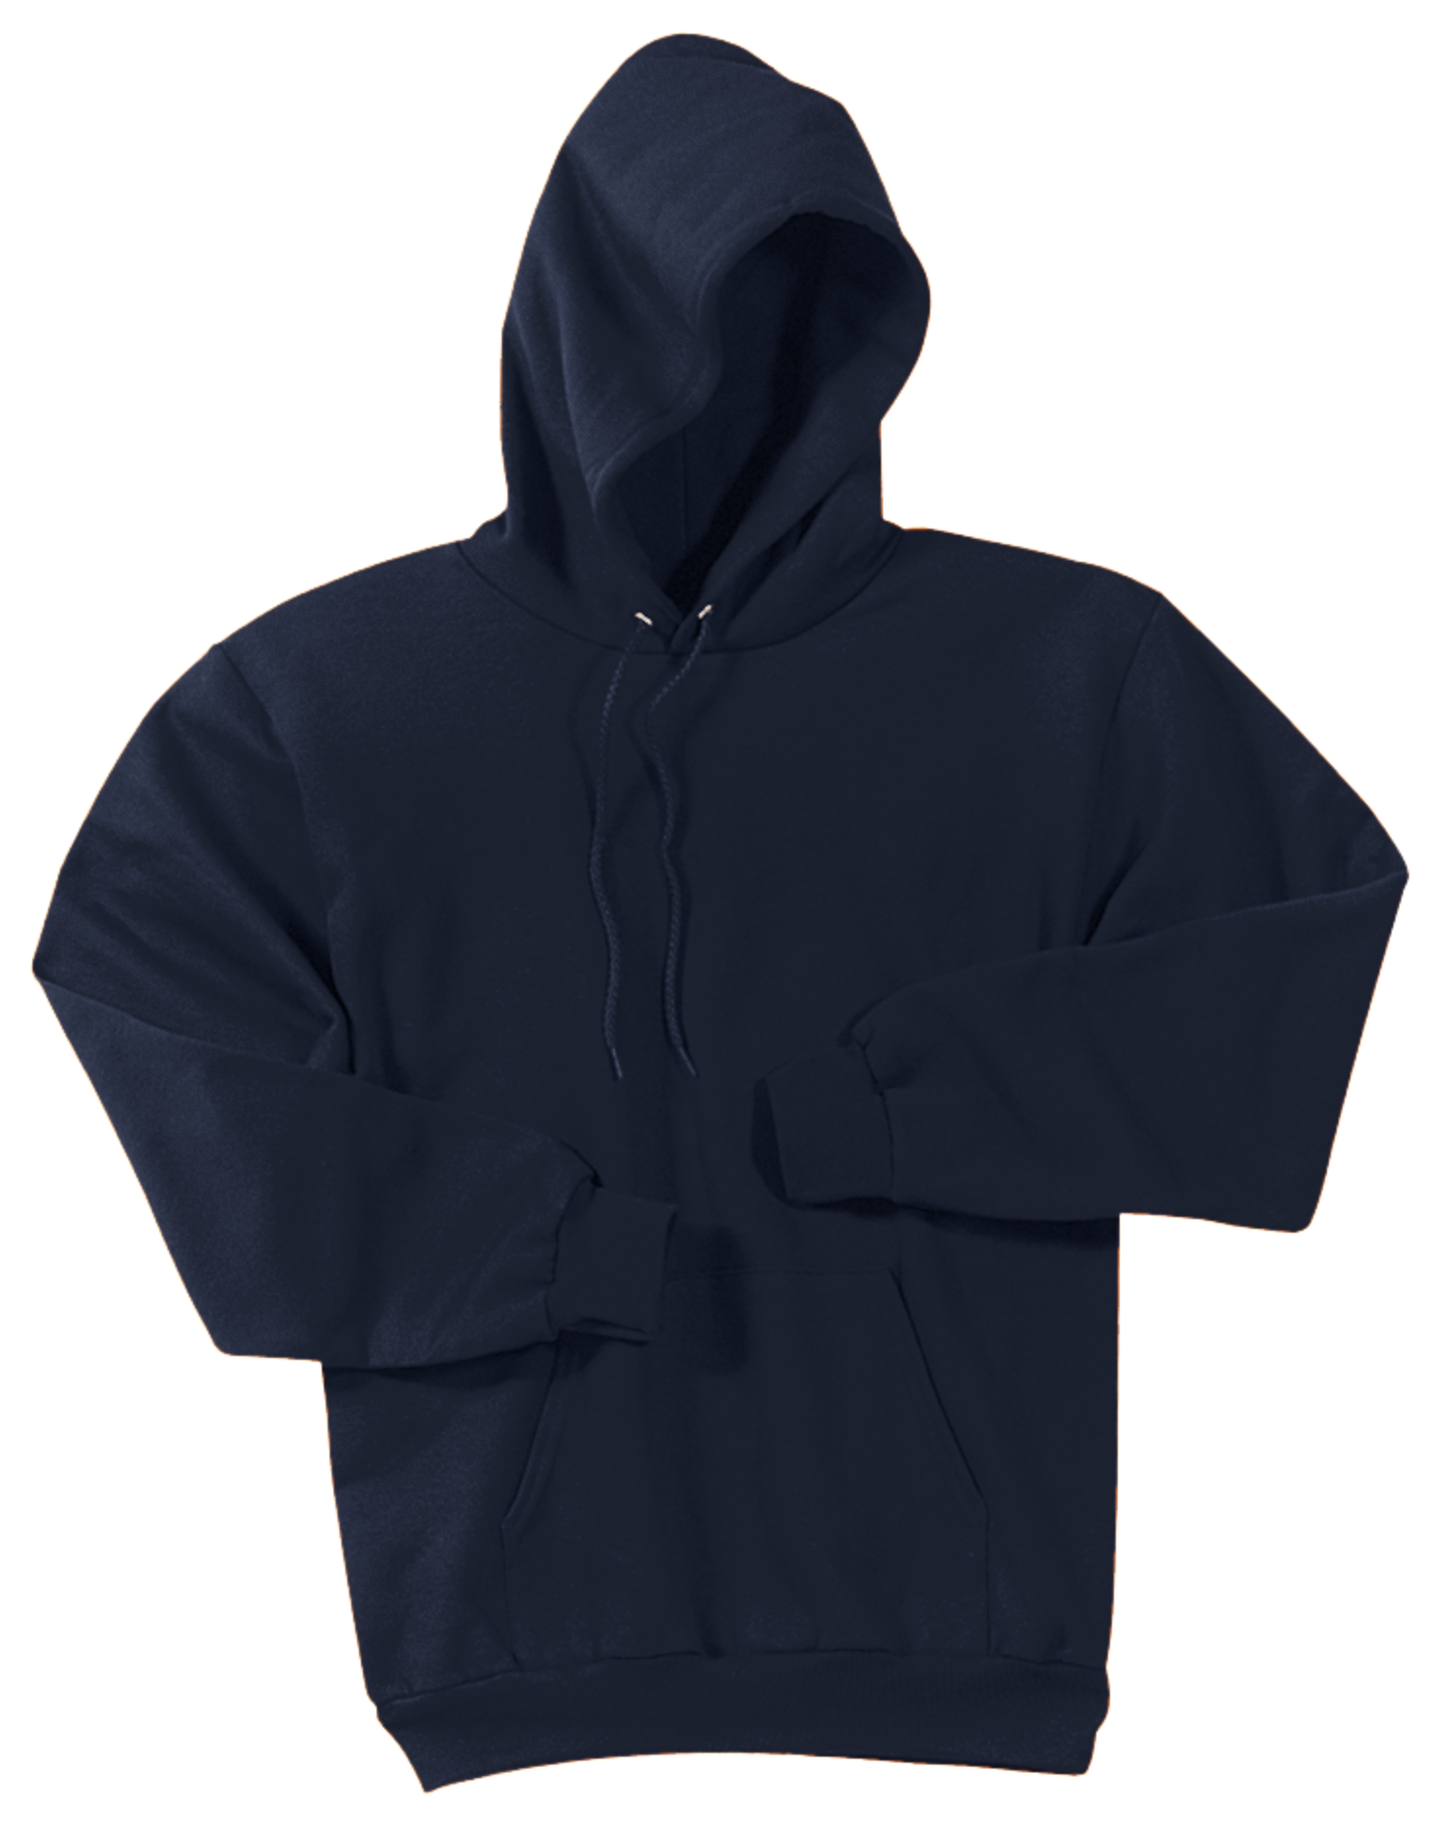 Adult Unisex Essential Fleece Pullover Hooded Sweatshirt